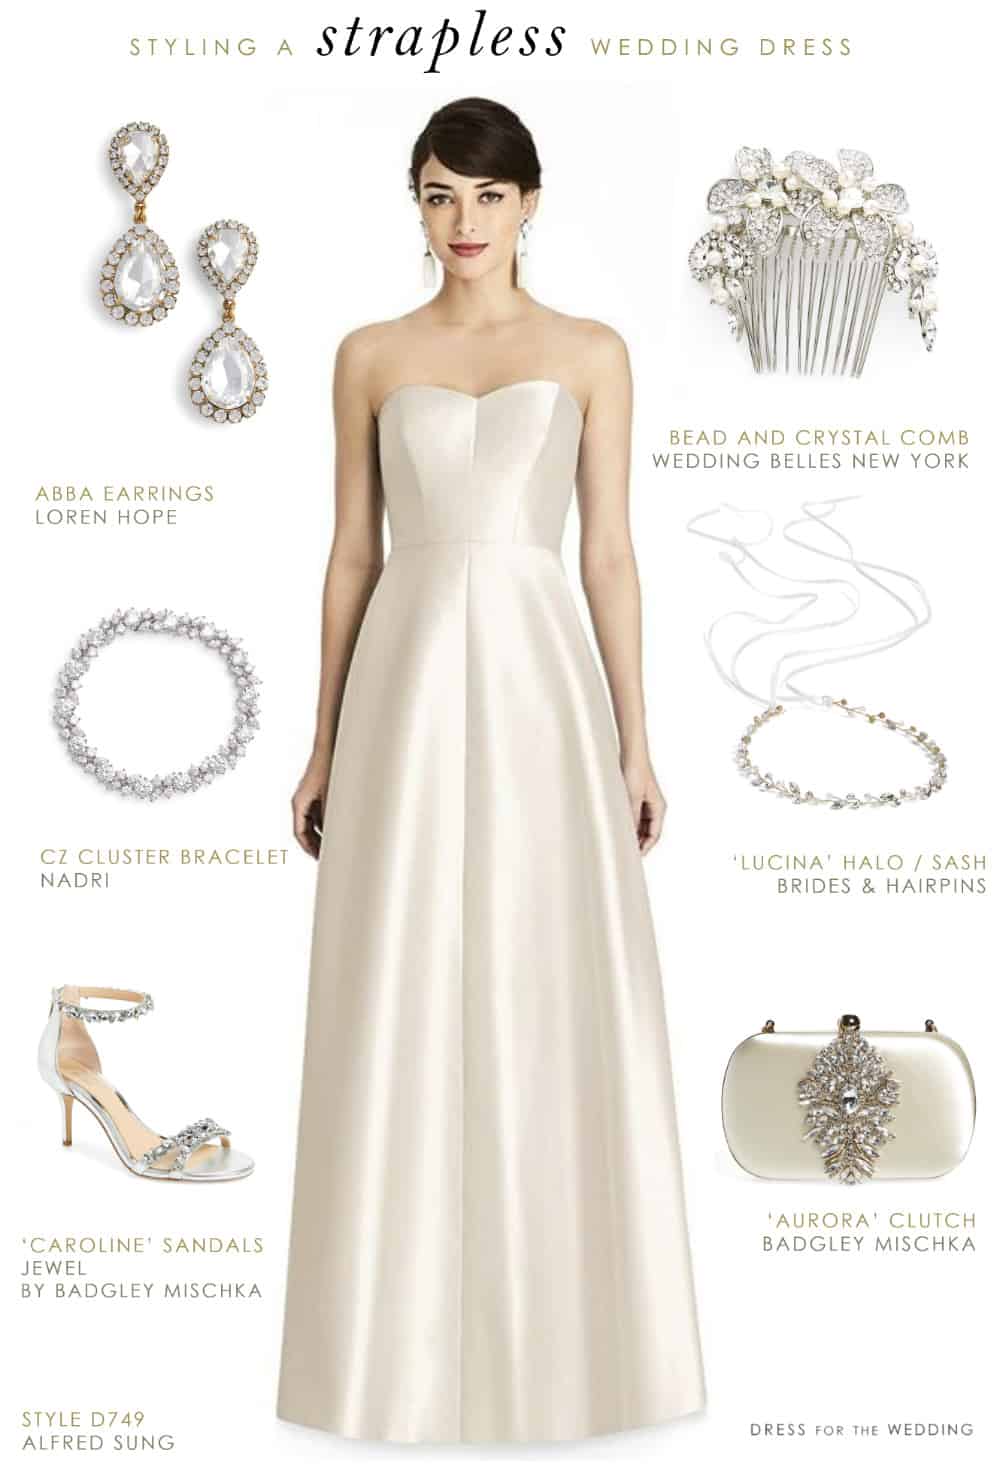 accessorize simple wedding dressimage